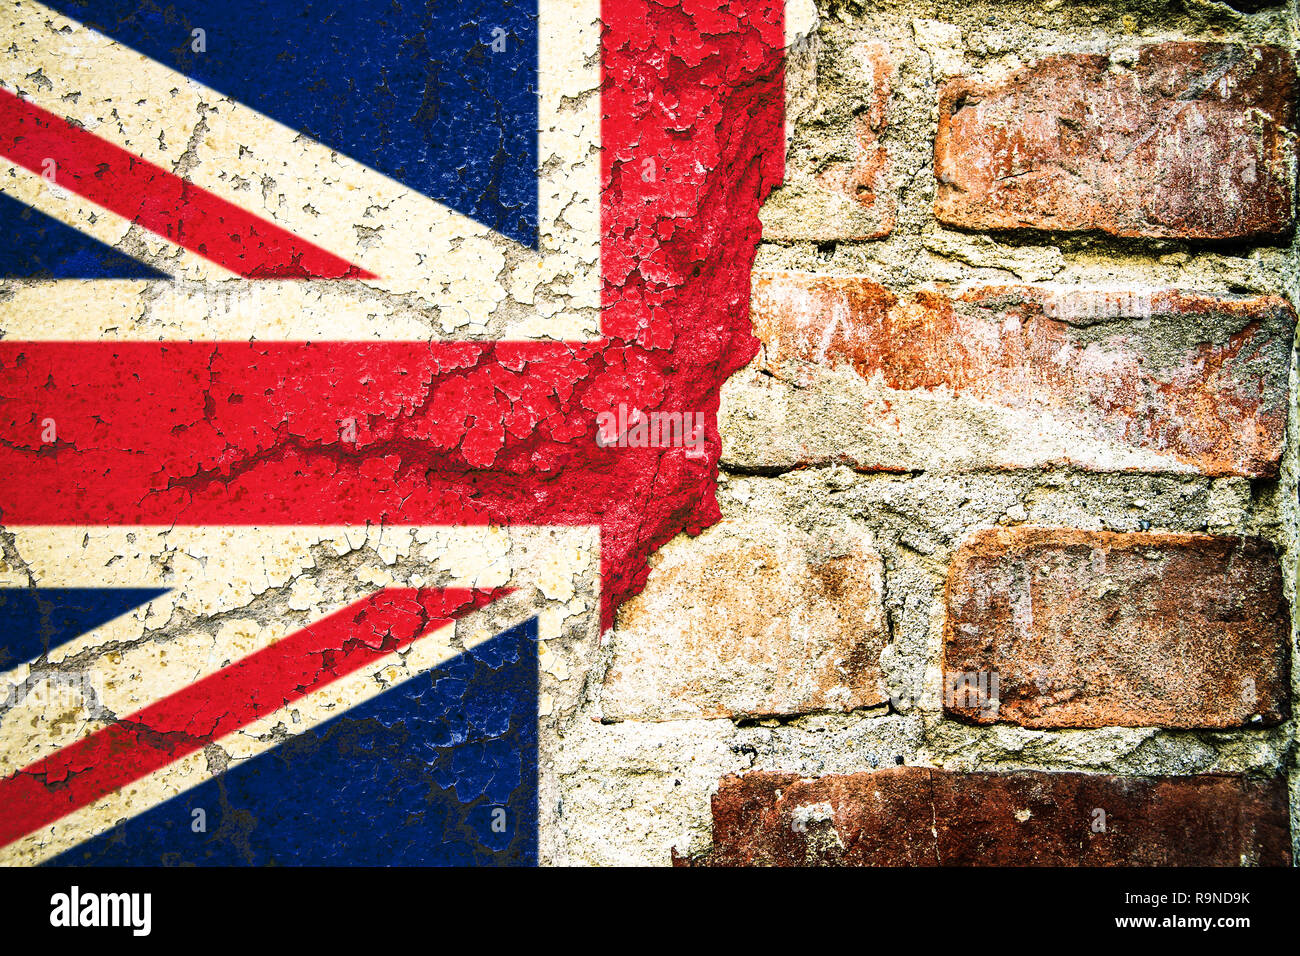 Reino Unido (UK) bandera pintada agrietado divide la pintura descarapelada pared de ladrillo fachada de cemento. Concepto imagen para Gran Bretaña, British, Inglaterra, Brexi Foto de stock